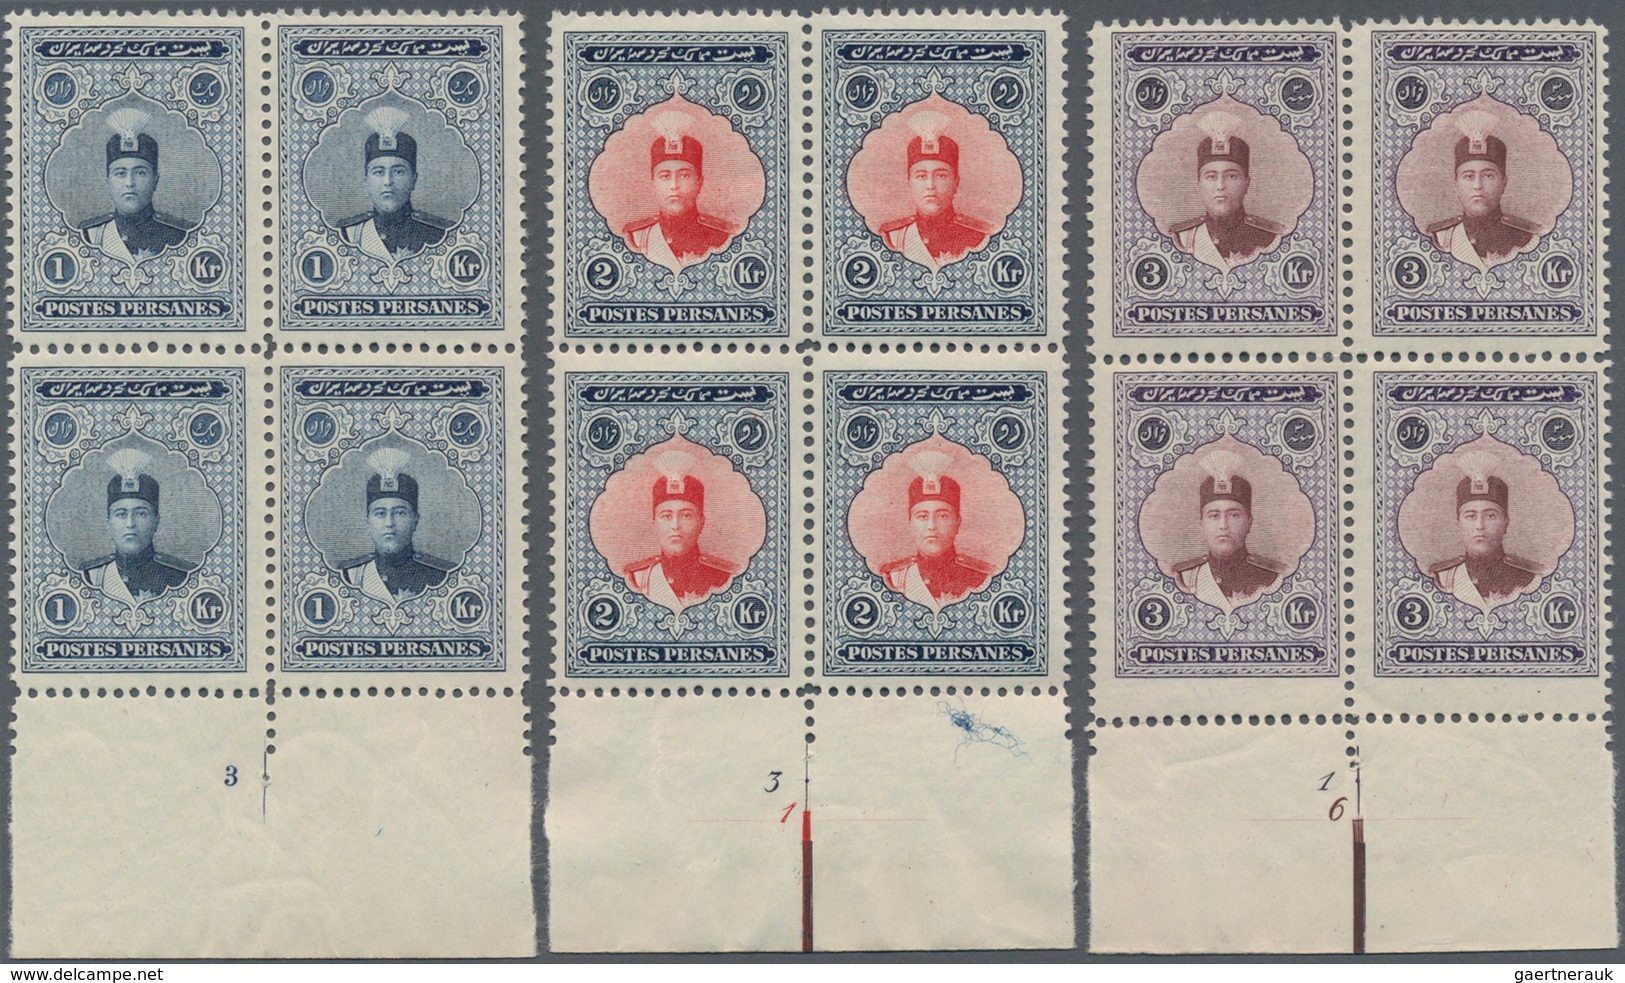 Iran: 1924/1925, Definitives Ahmad Shah Qajar, 1ch., 6ch., 9ch. and 1kr.-30kr., ten values in bottom